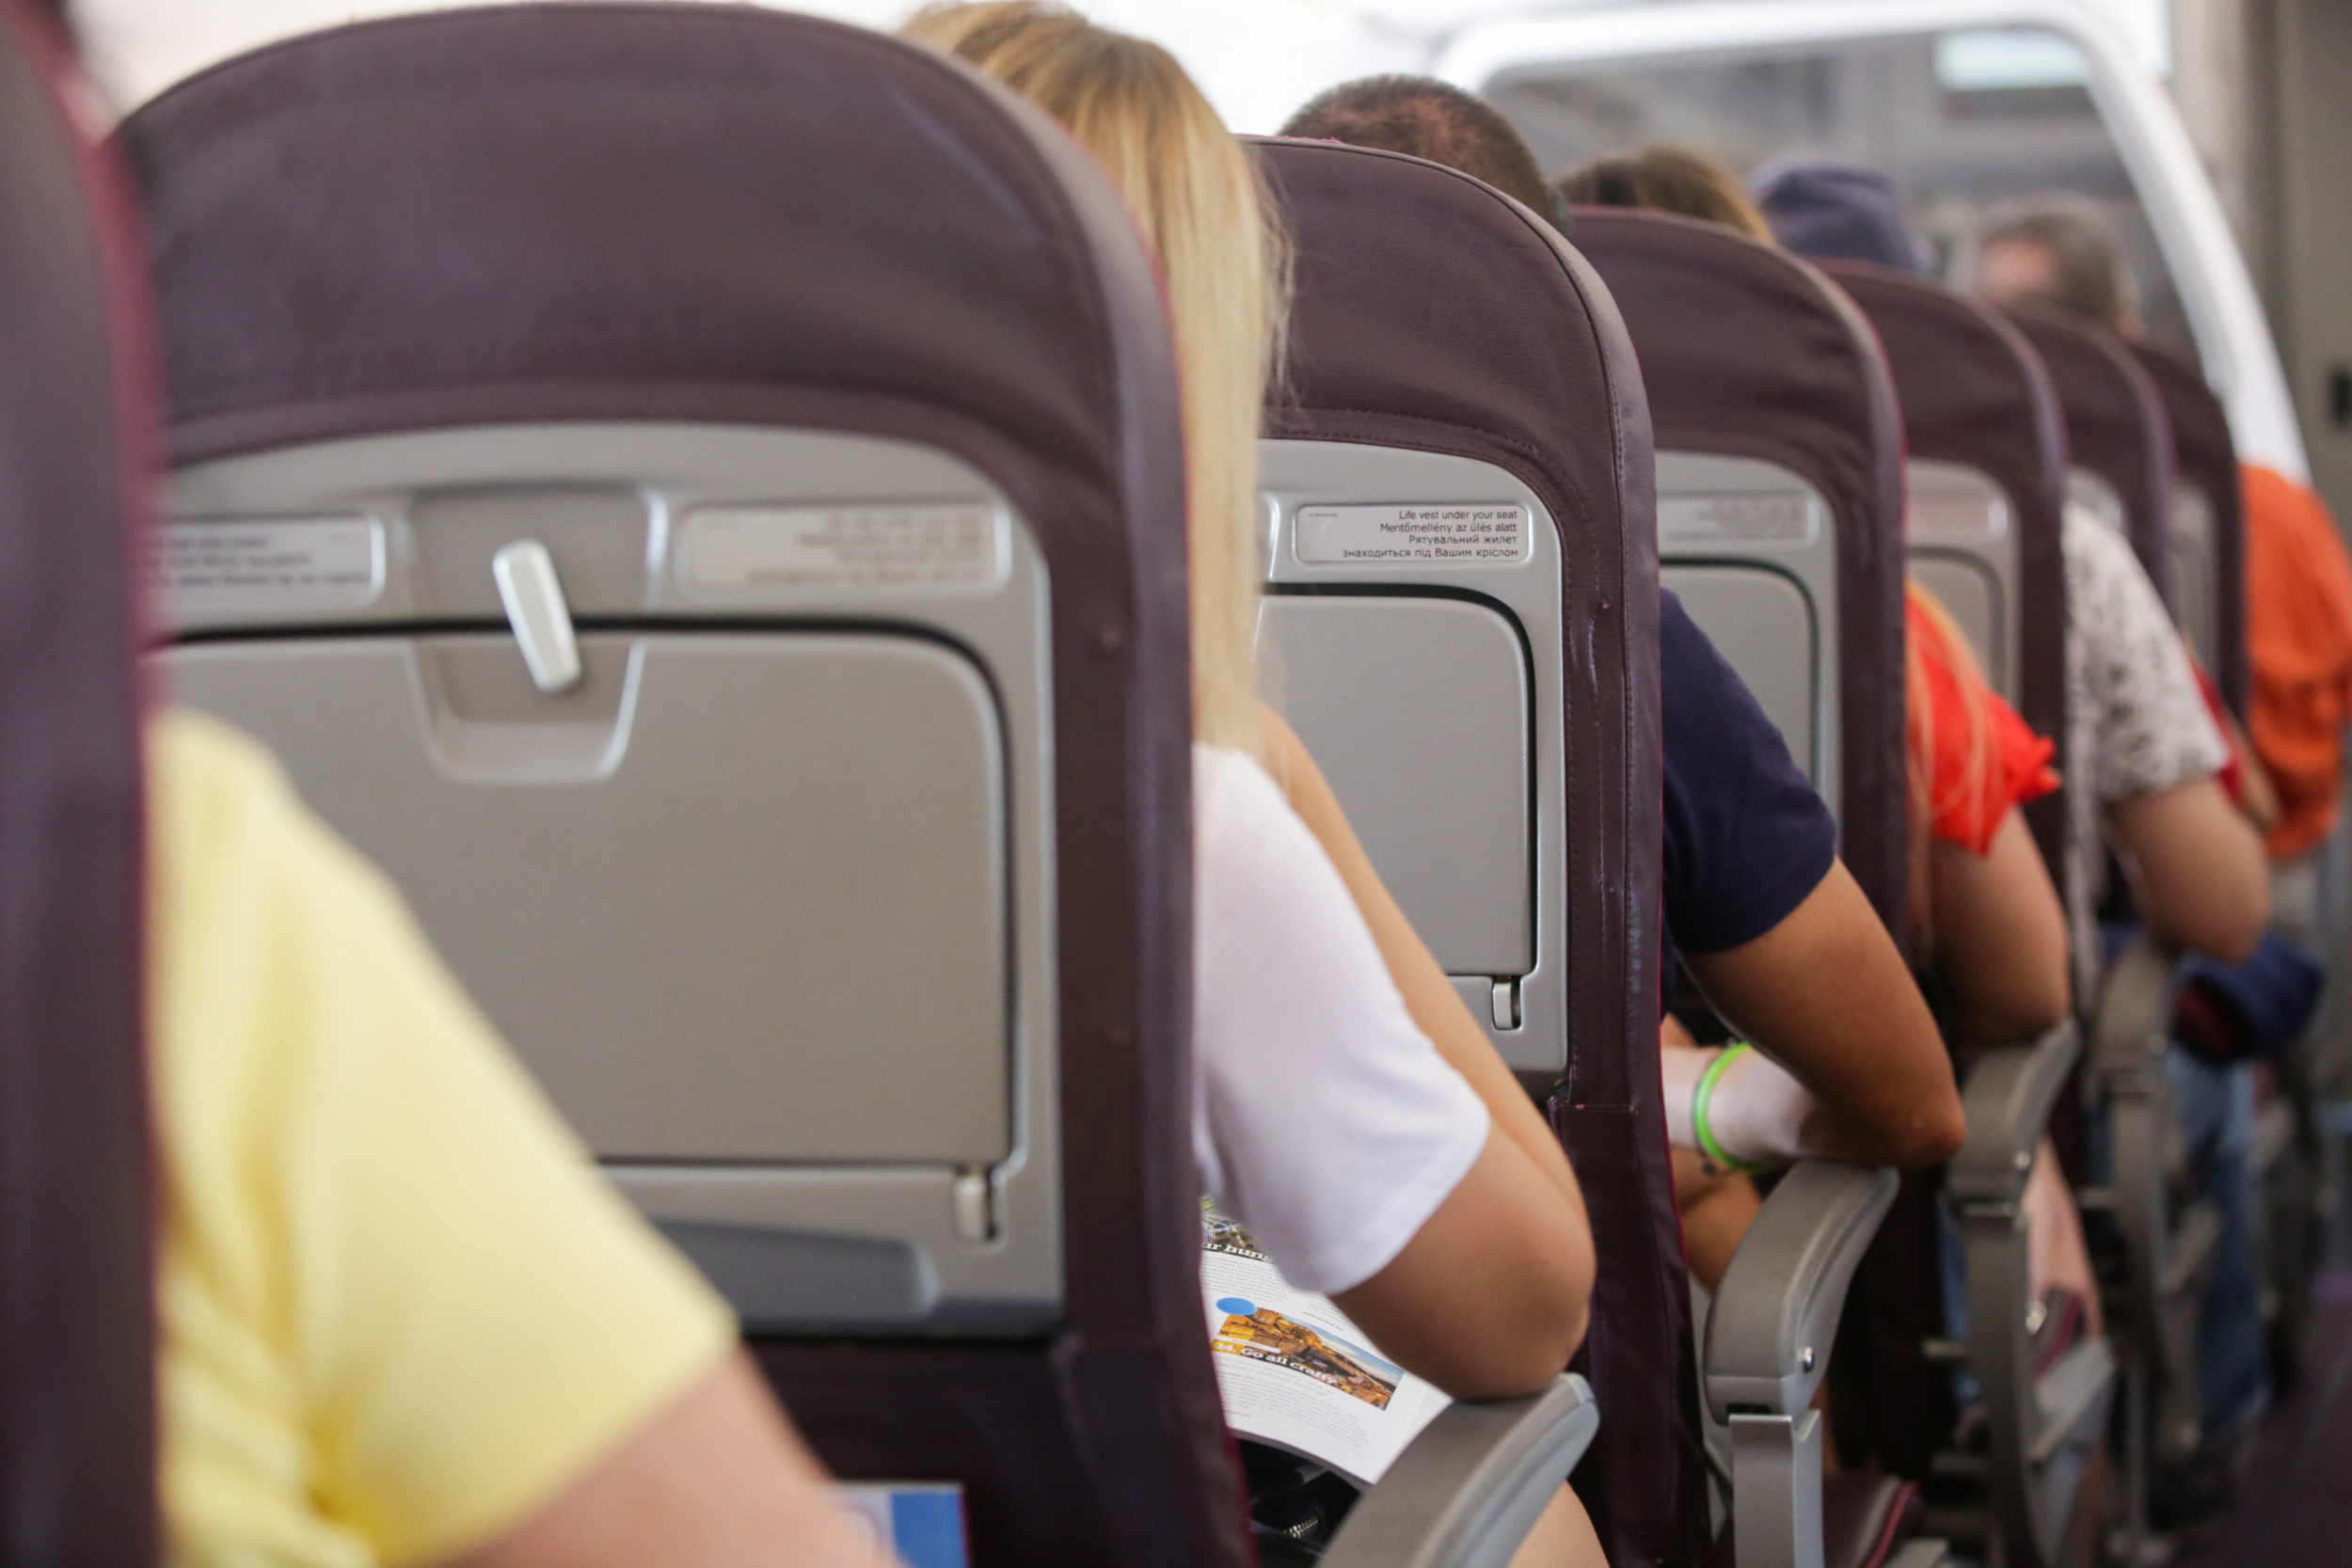 https://d.newsweek.com/en/full/2050365/airplane-seats-interior.jpg